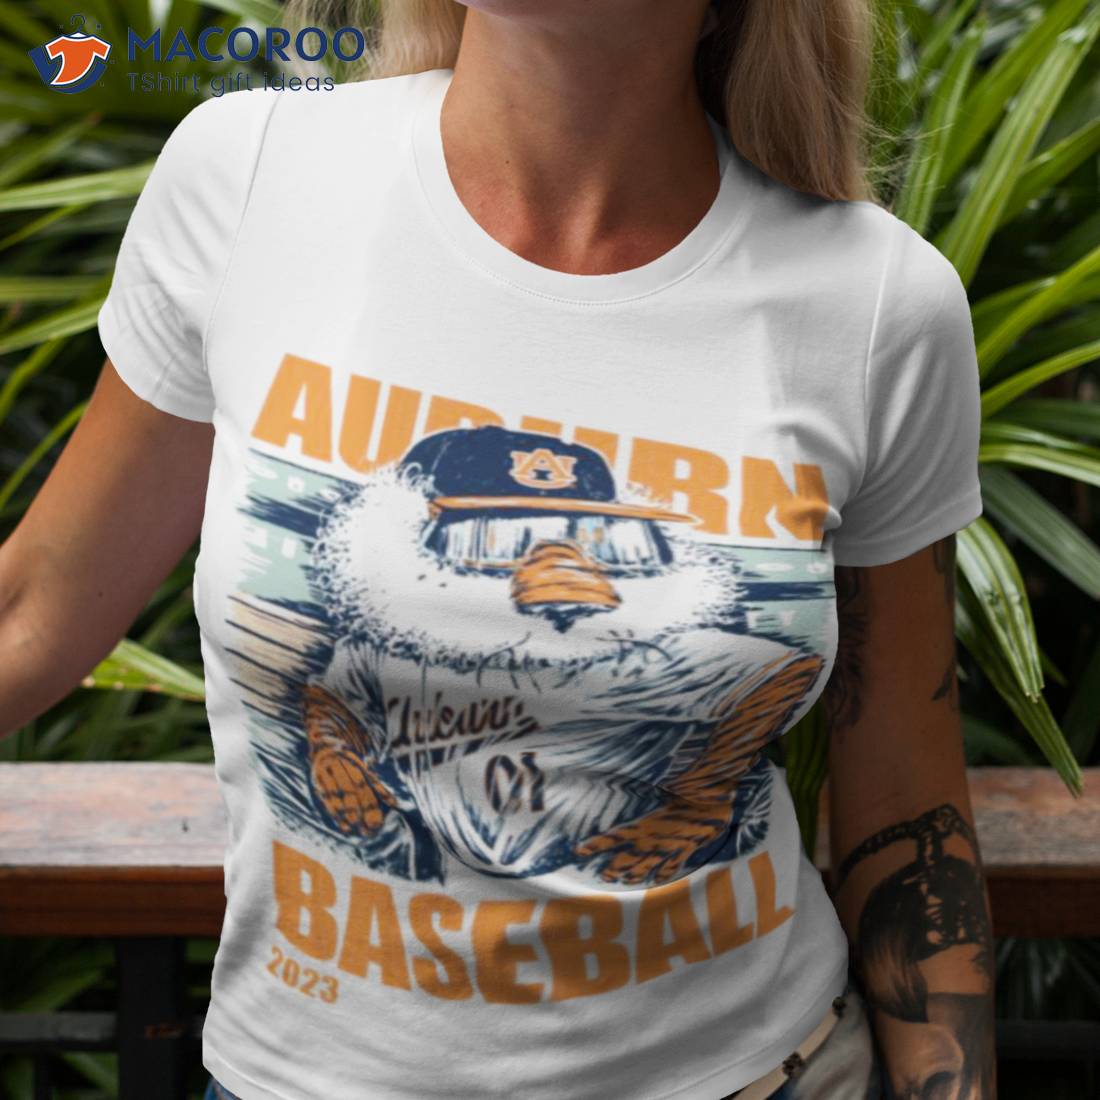 tigers baseball t shirt